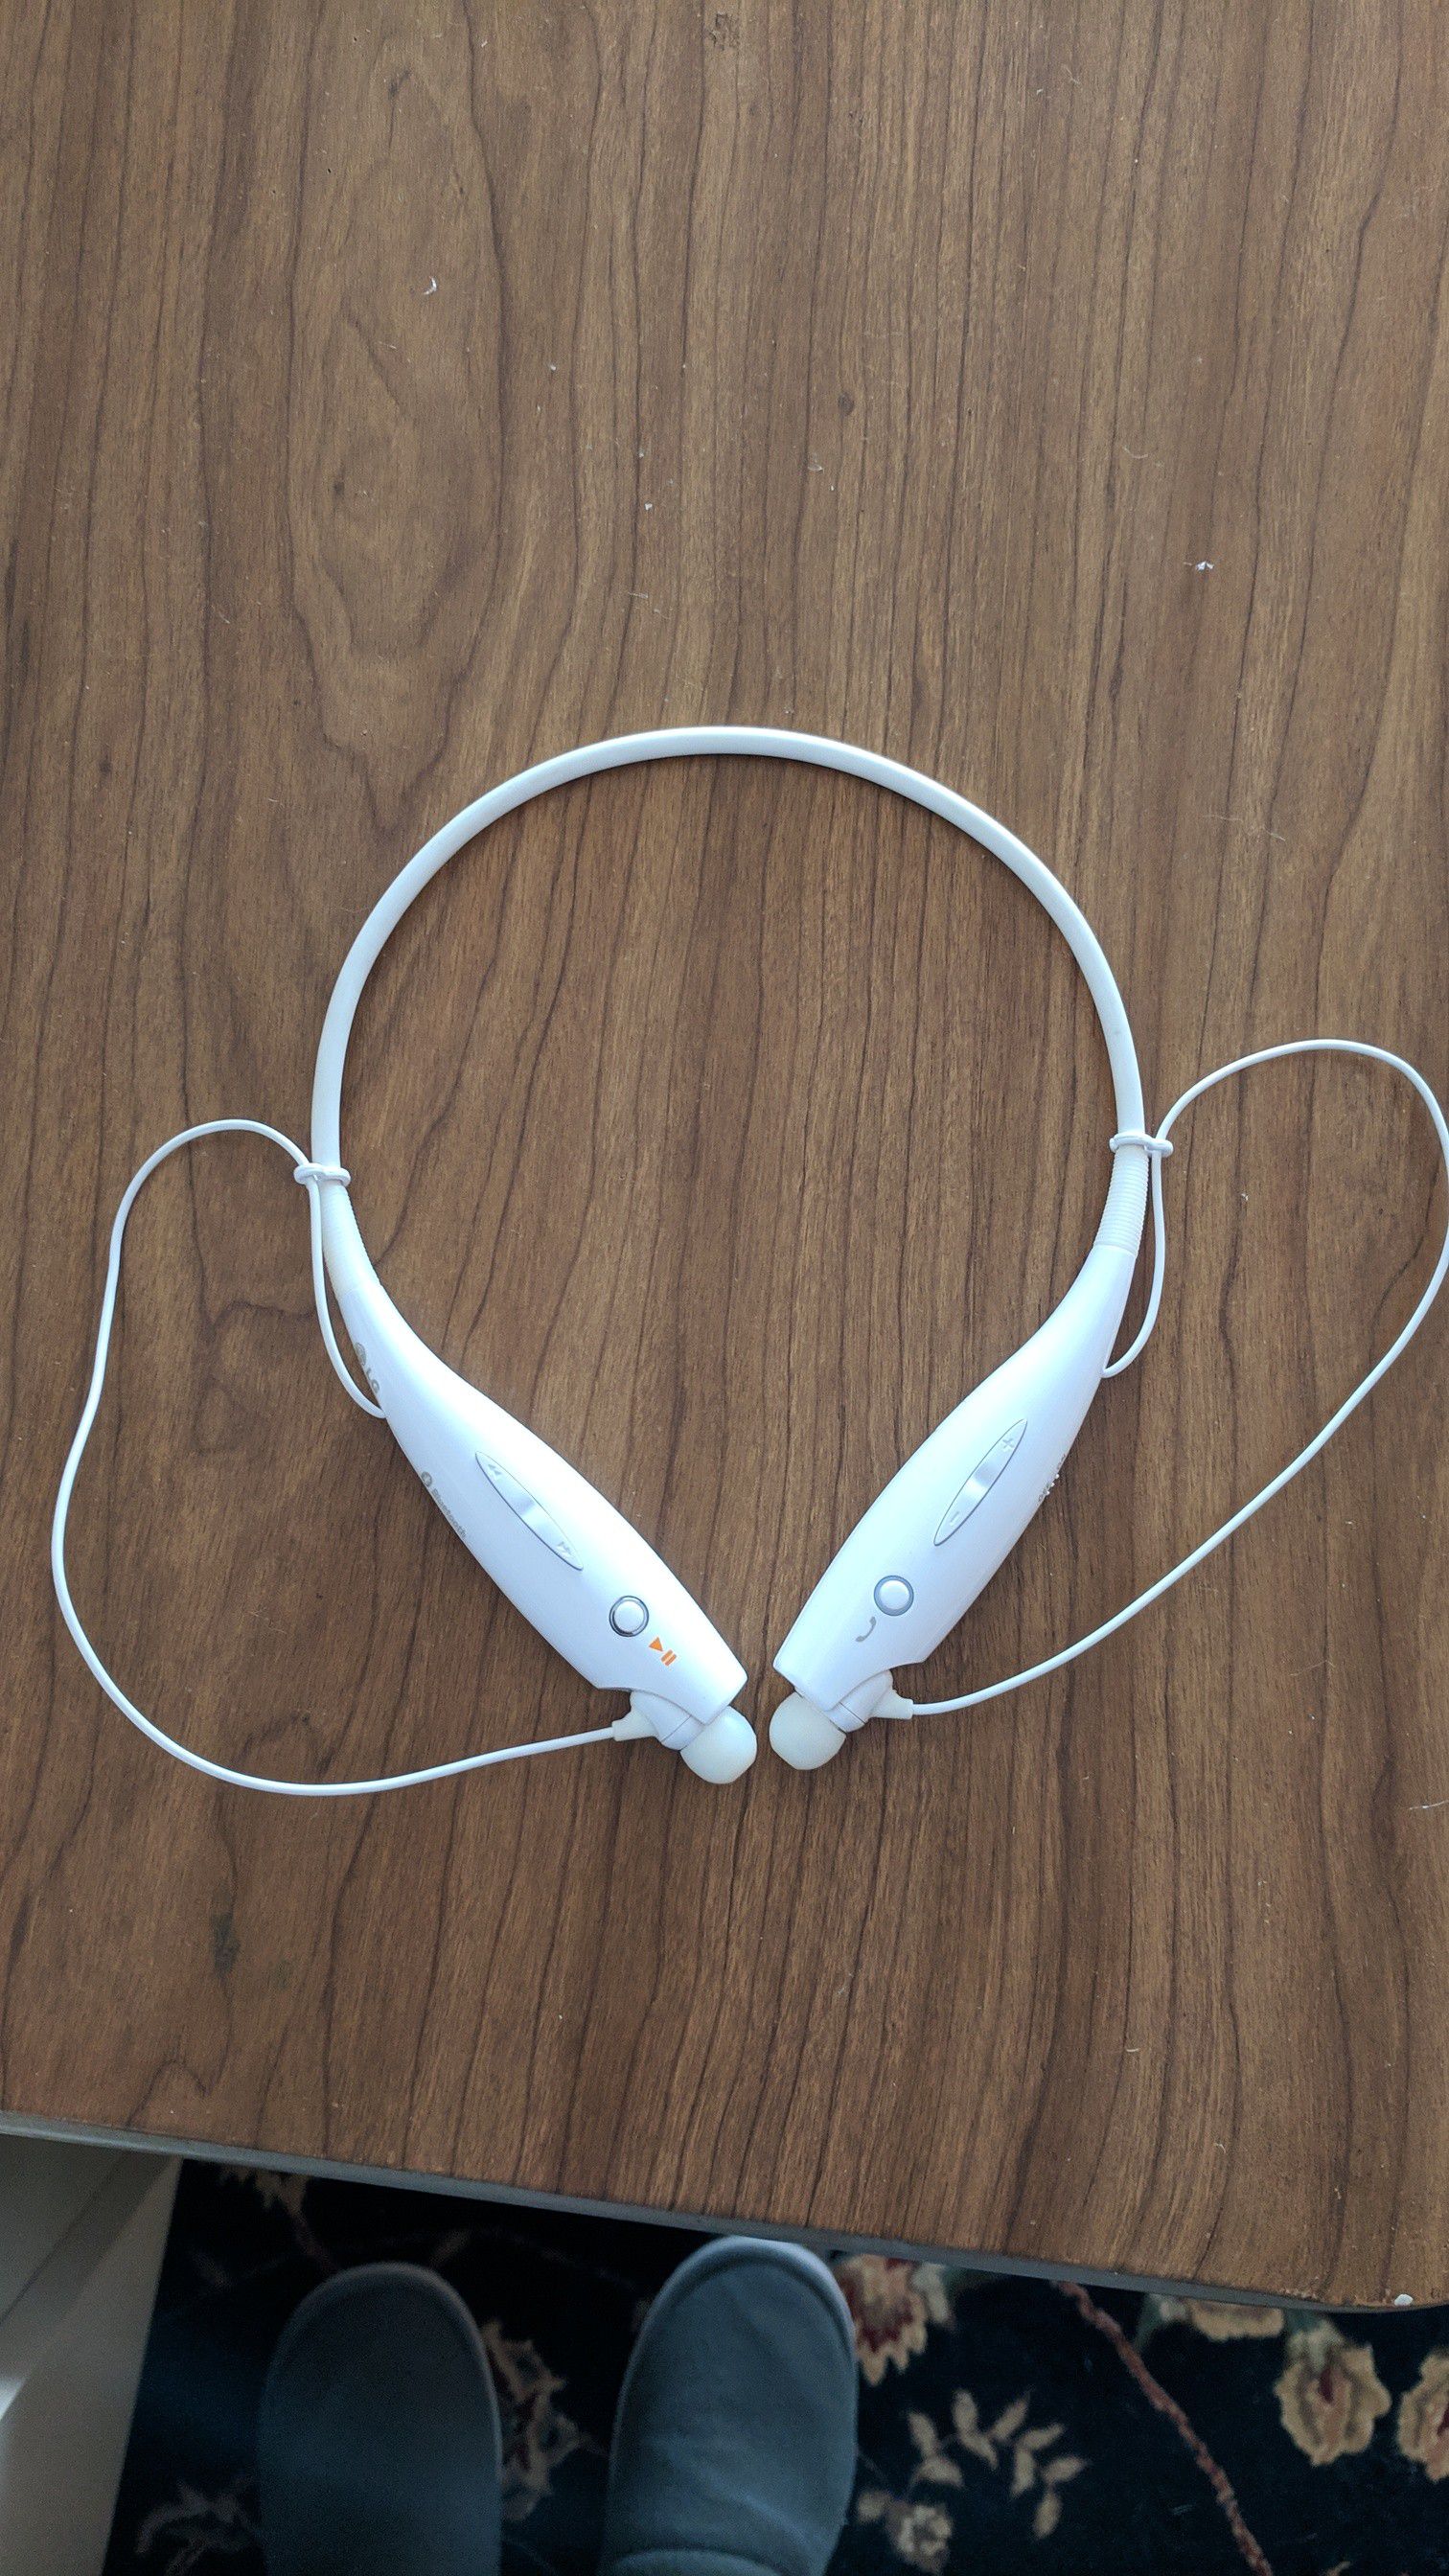 LG Wireless Bluetooth headphones